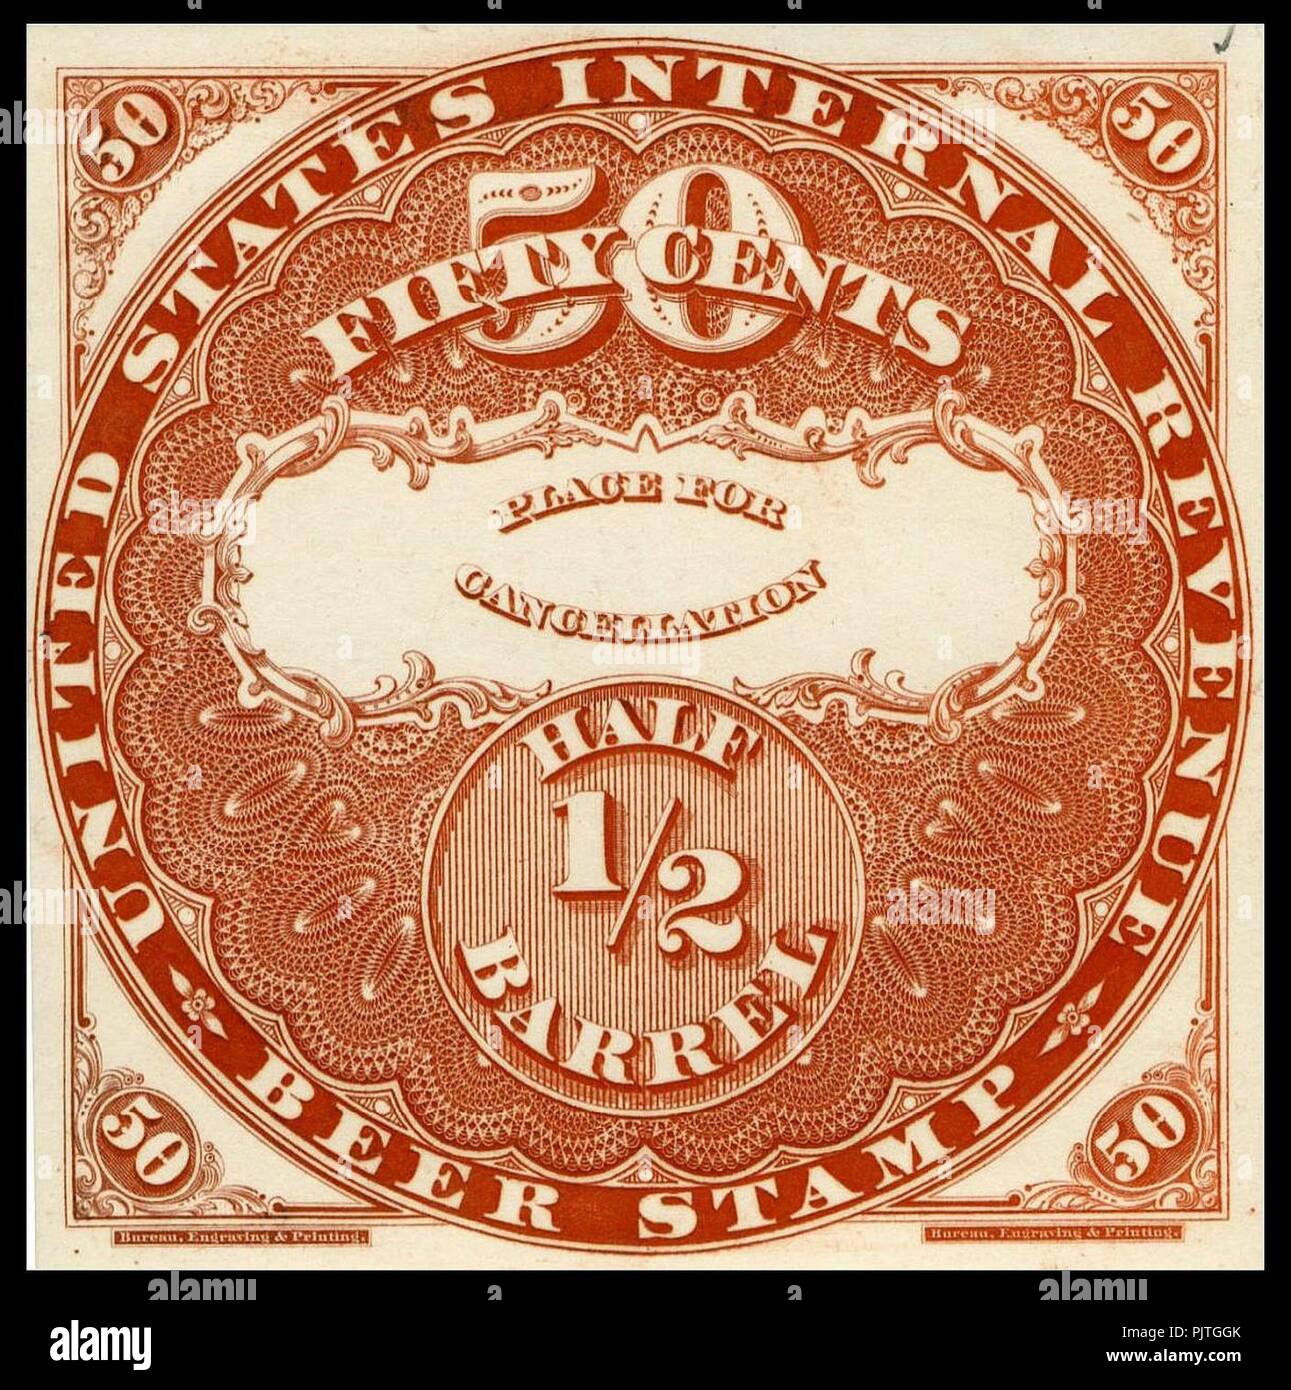 Beer revenue stamp 50c 1870 issue. Stock Photo